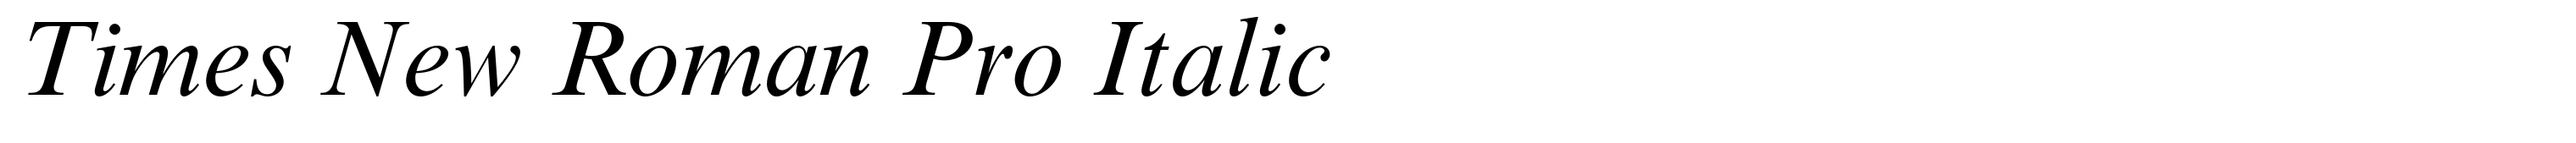 Times New Roman Pro Italic